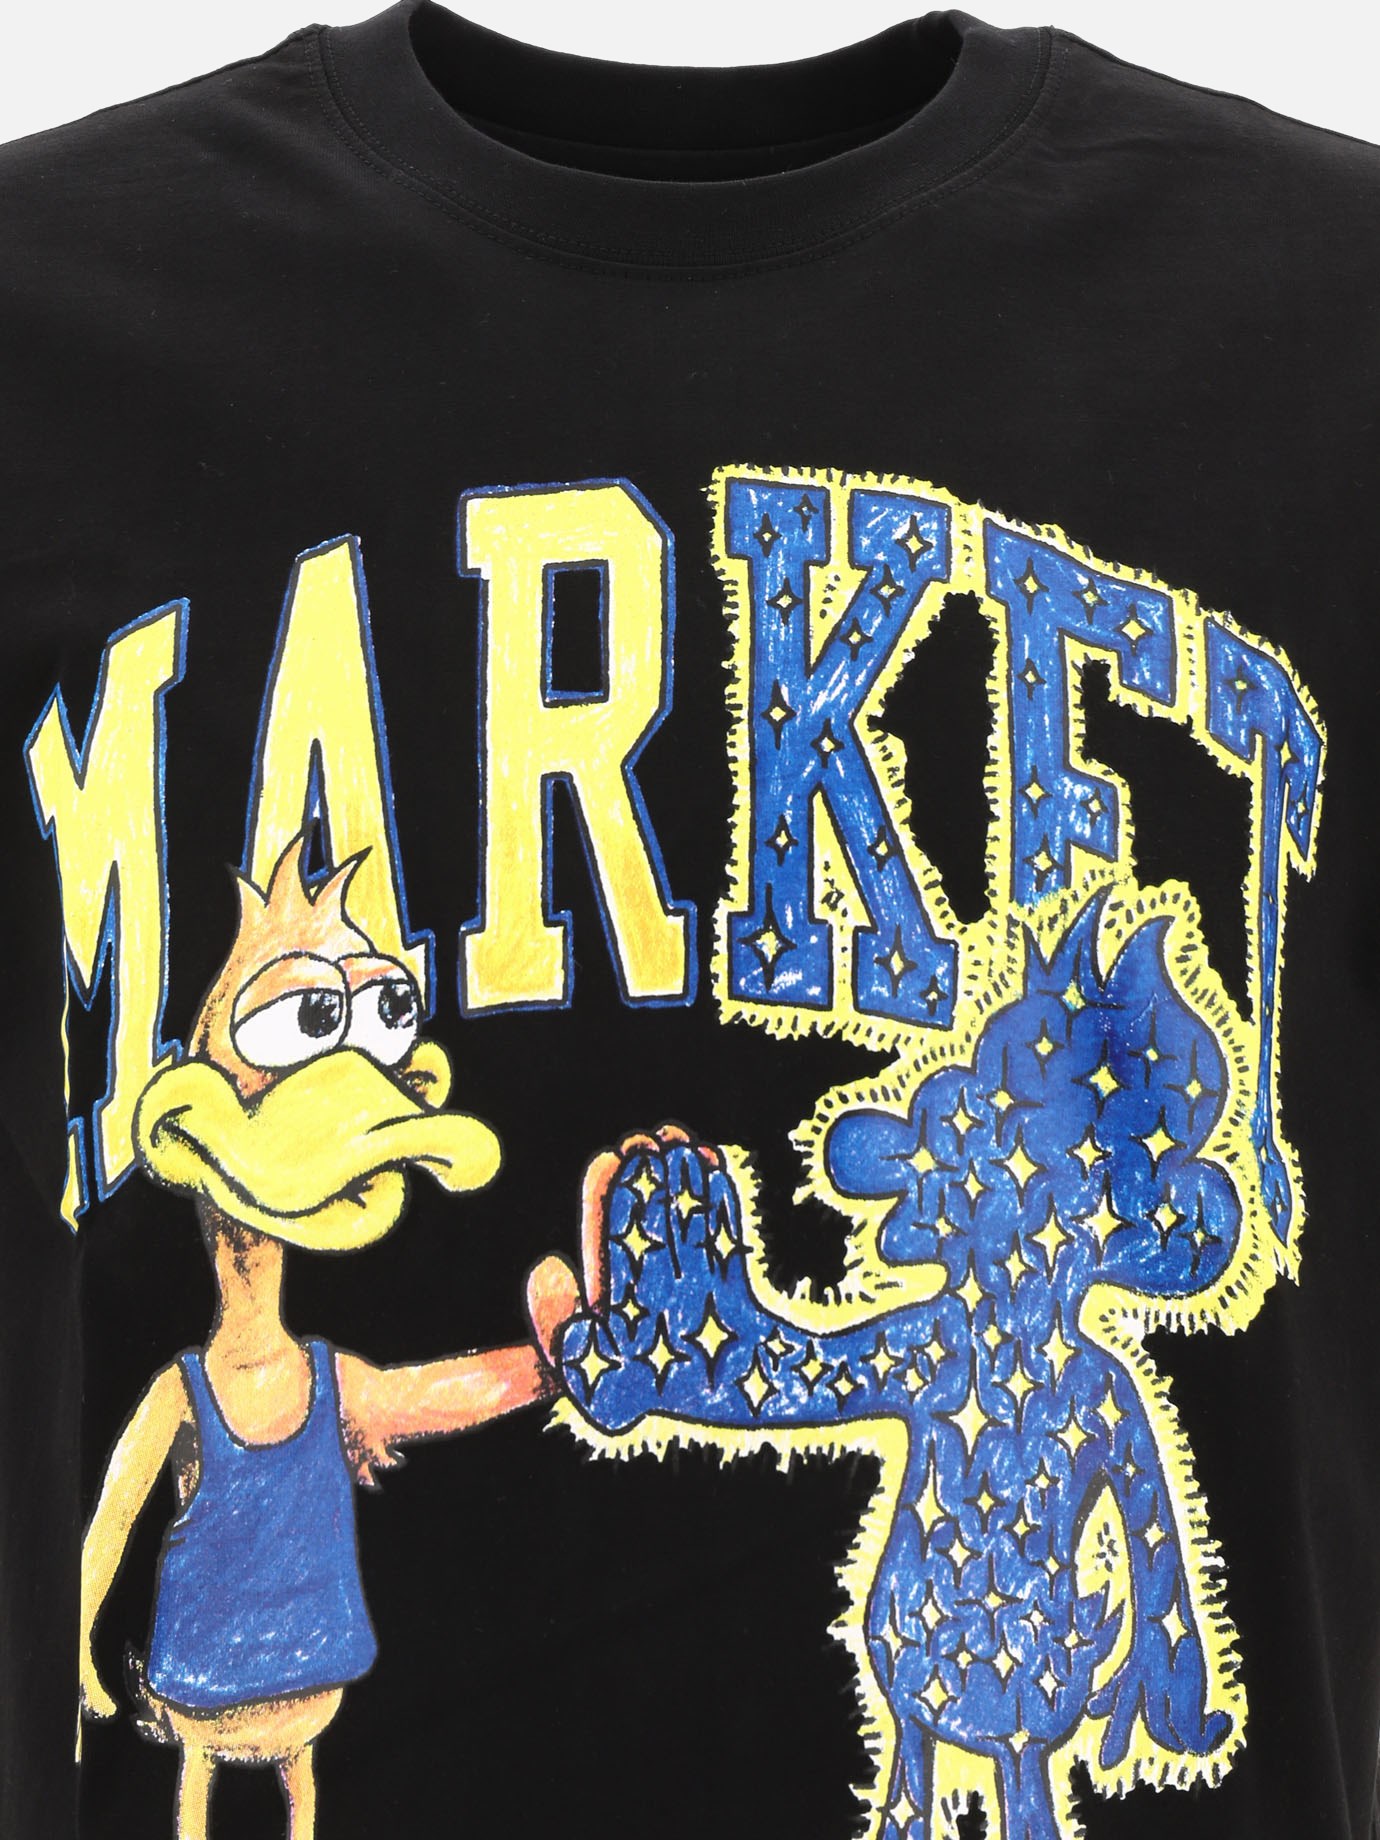  Dark and Light  t-shirt by Market